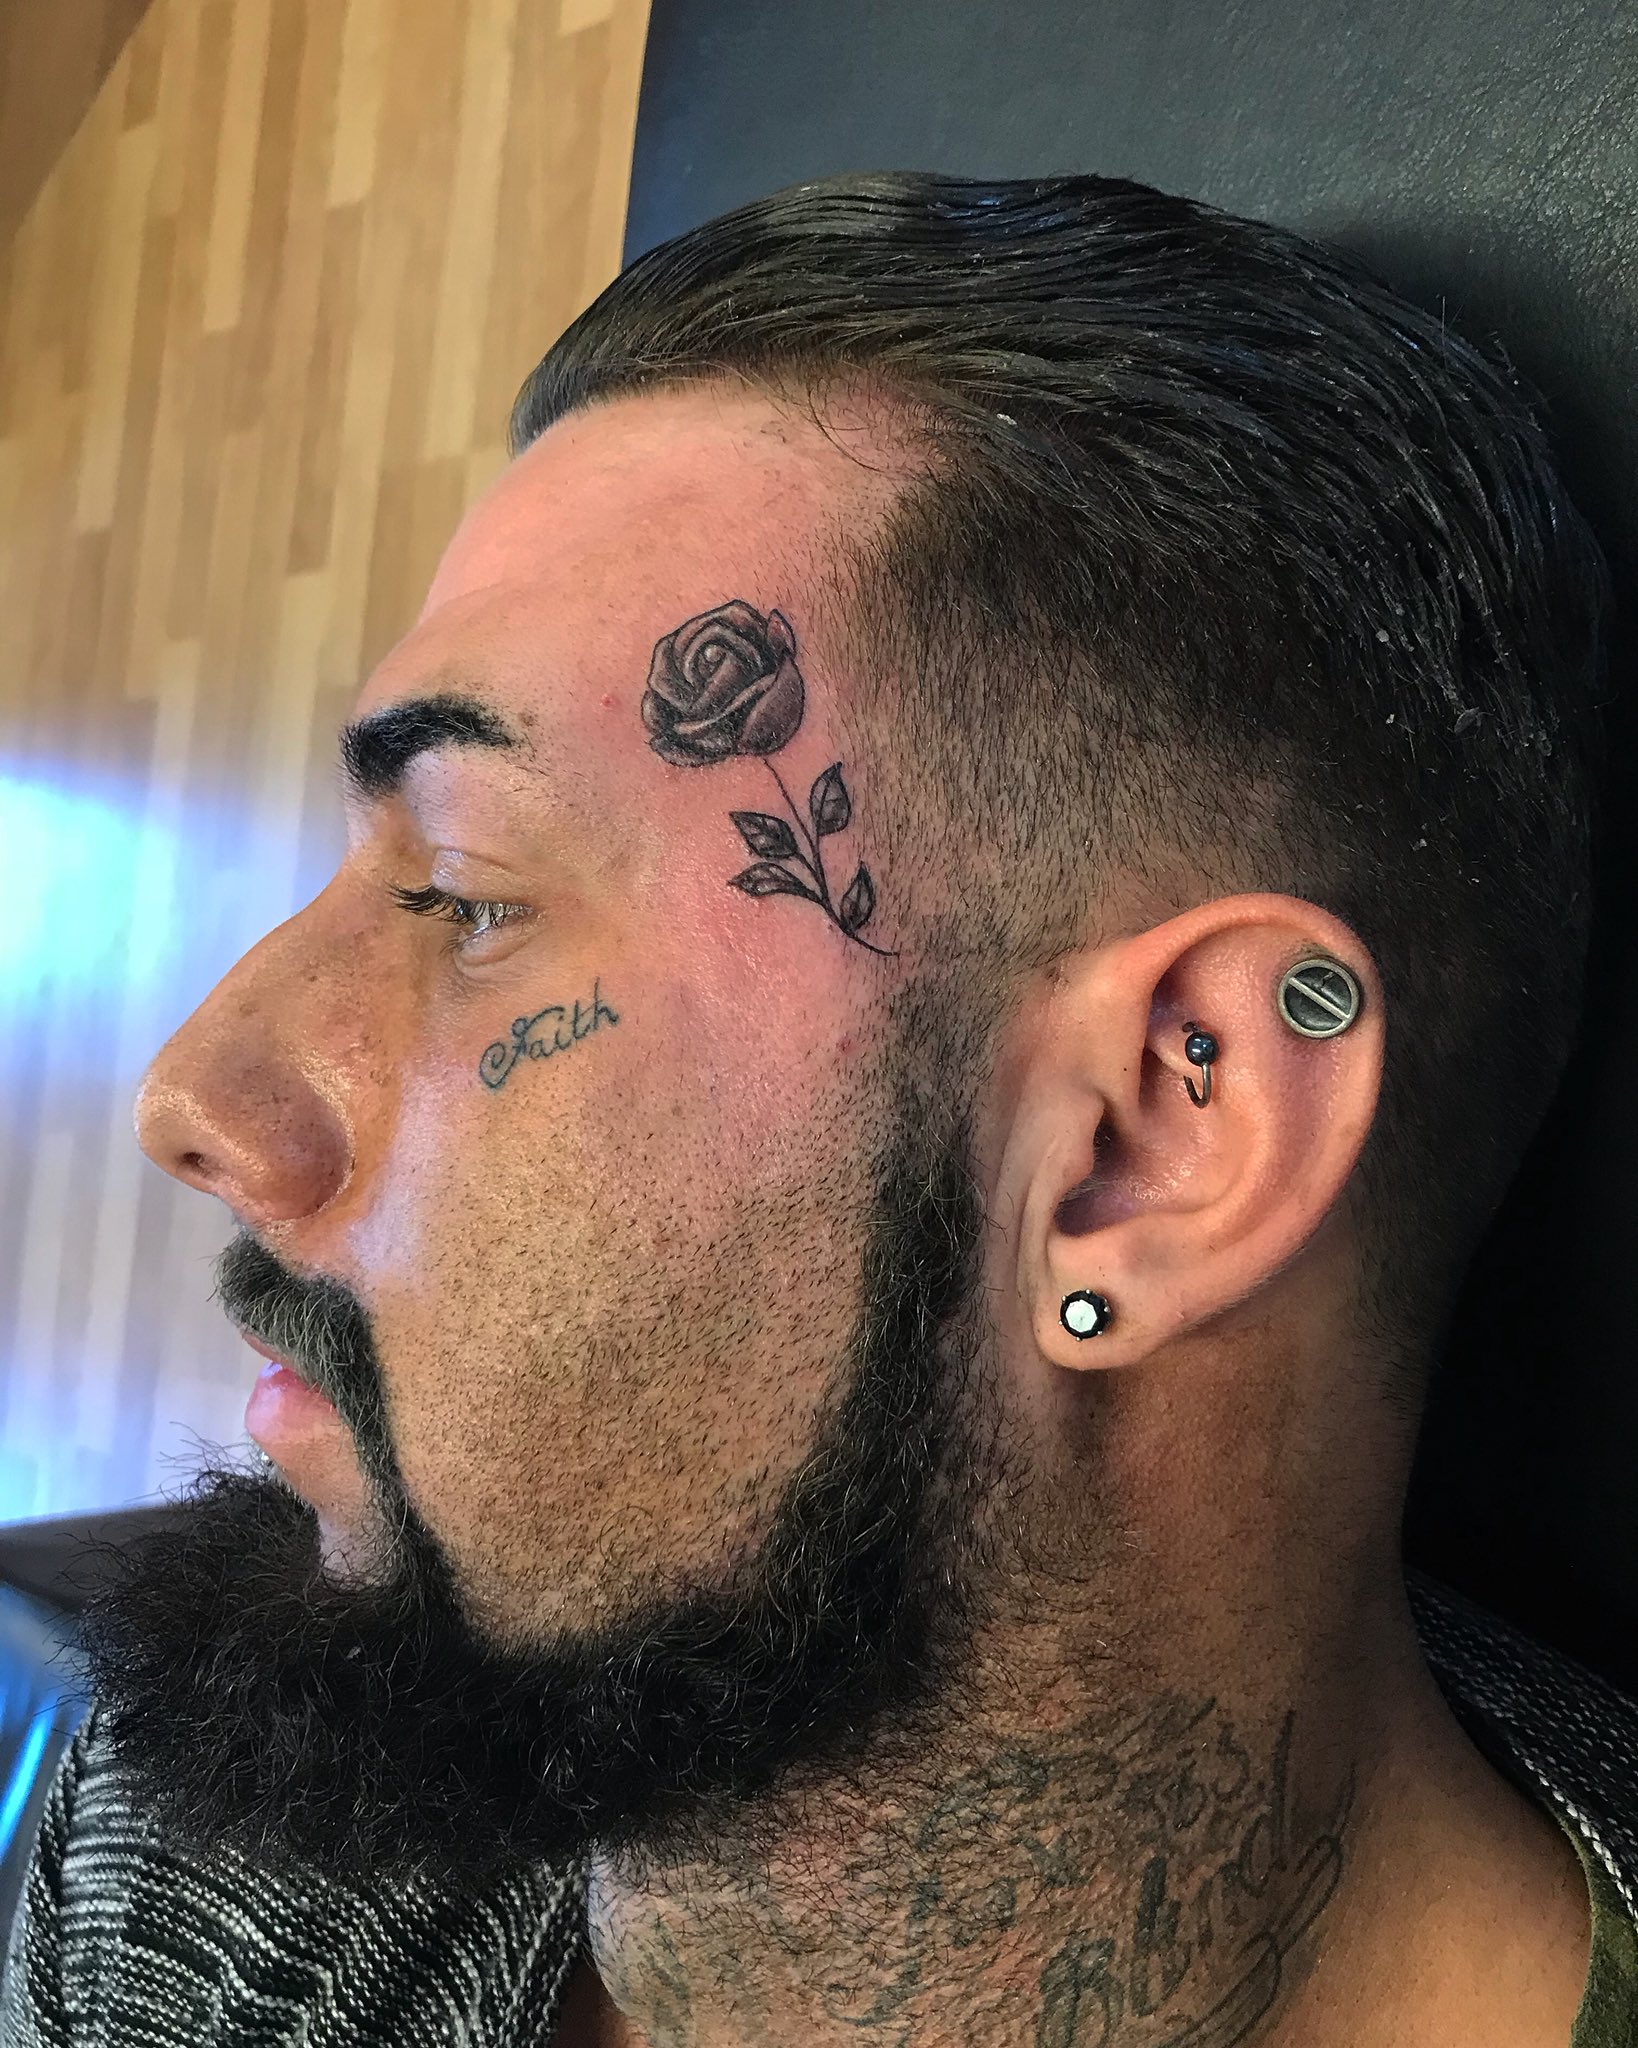 UF Tattoo Studio on X: "Rose face tattoo done with shadowline black / grey and radiant white #ink #inked #art #bodyart #tattoo #tattooed #facetattoo #sheffieldtattoo #gazleecrofts #unionforgetattoostudio #darksidetattoosupplies https://t.co/7i83c8wAau" / X